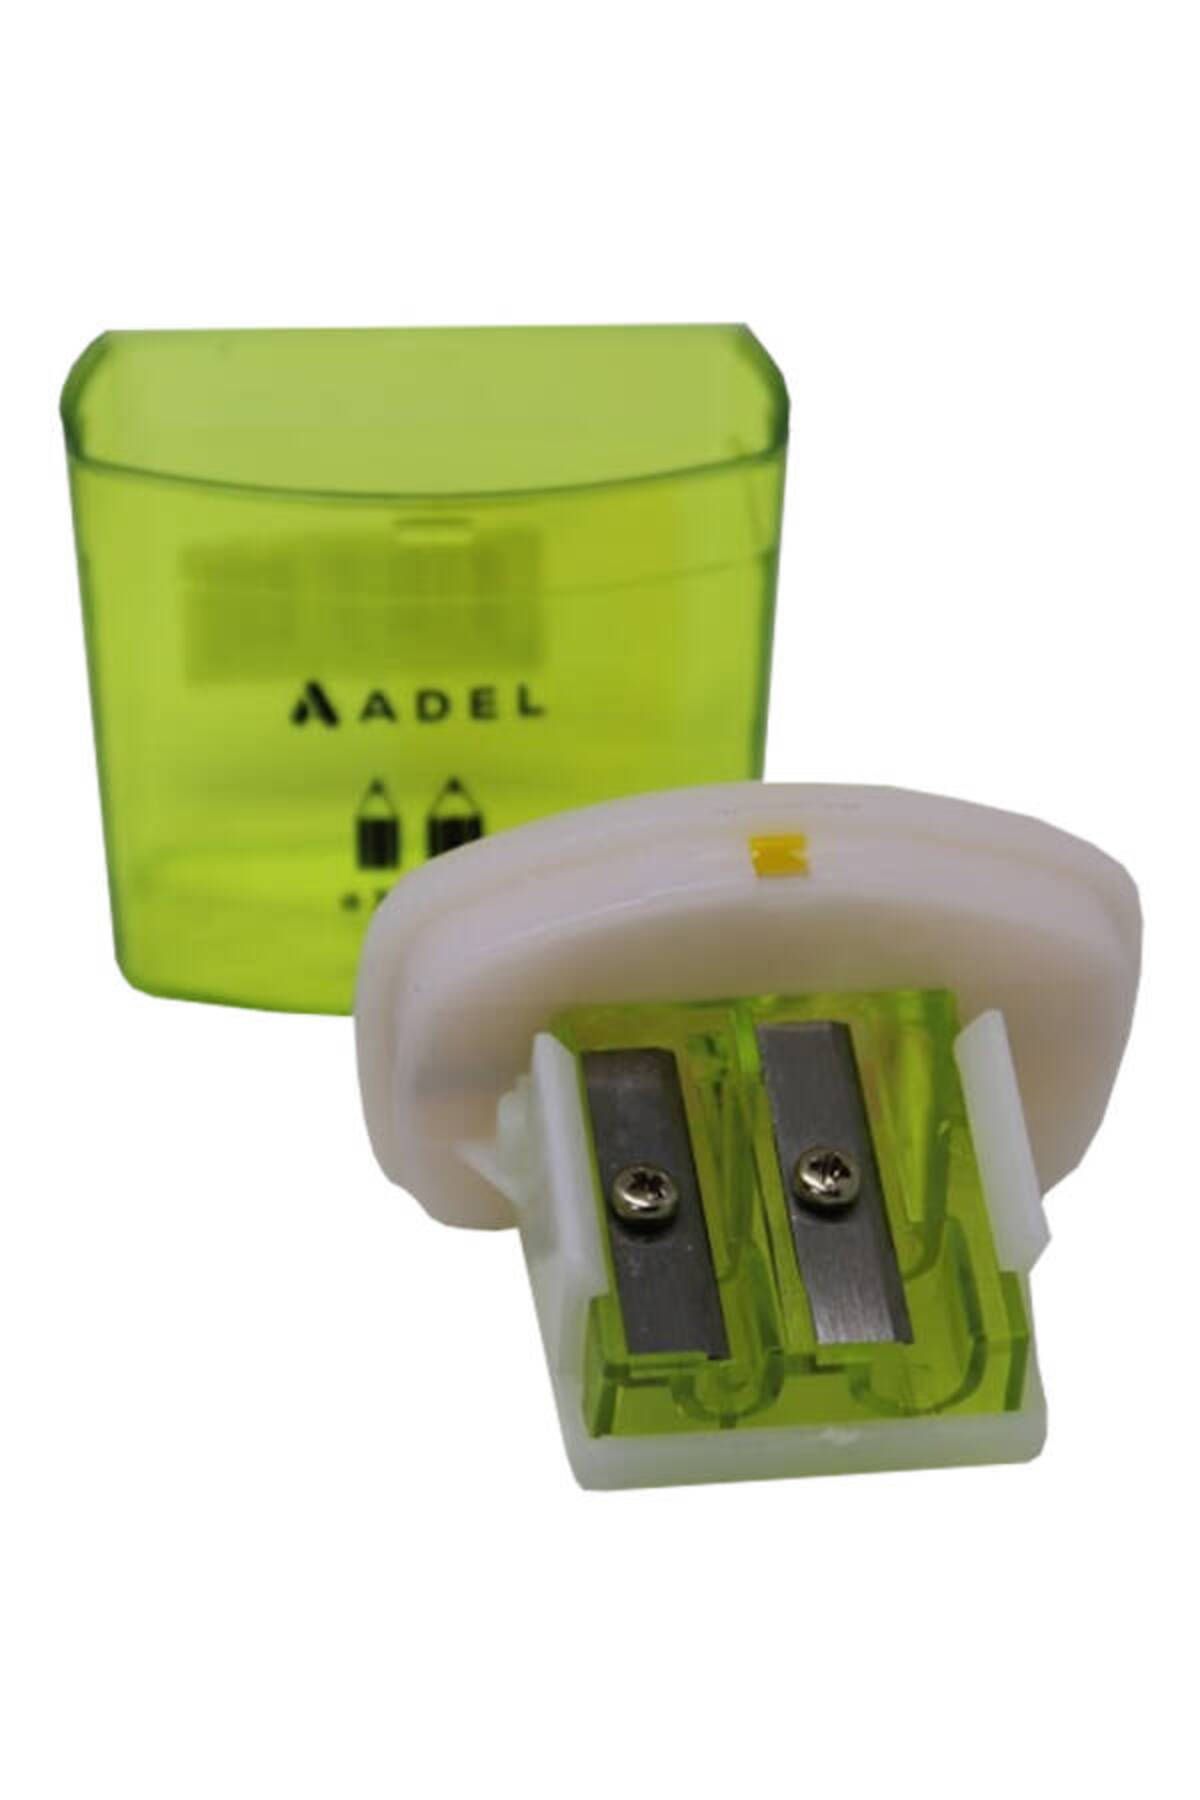 Adel Auto Lock Sharpener Kalemtıraş 685